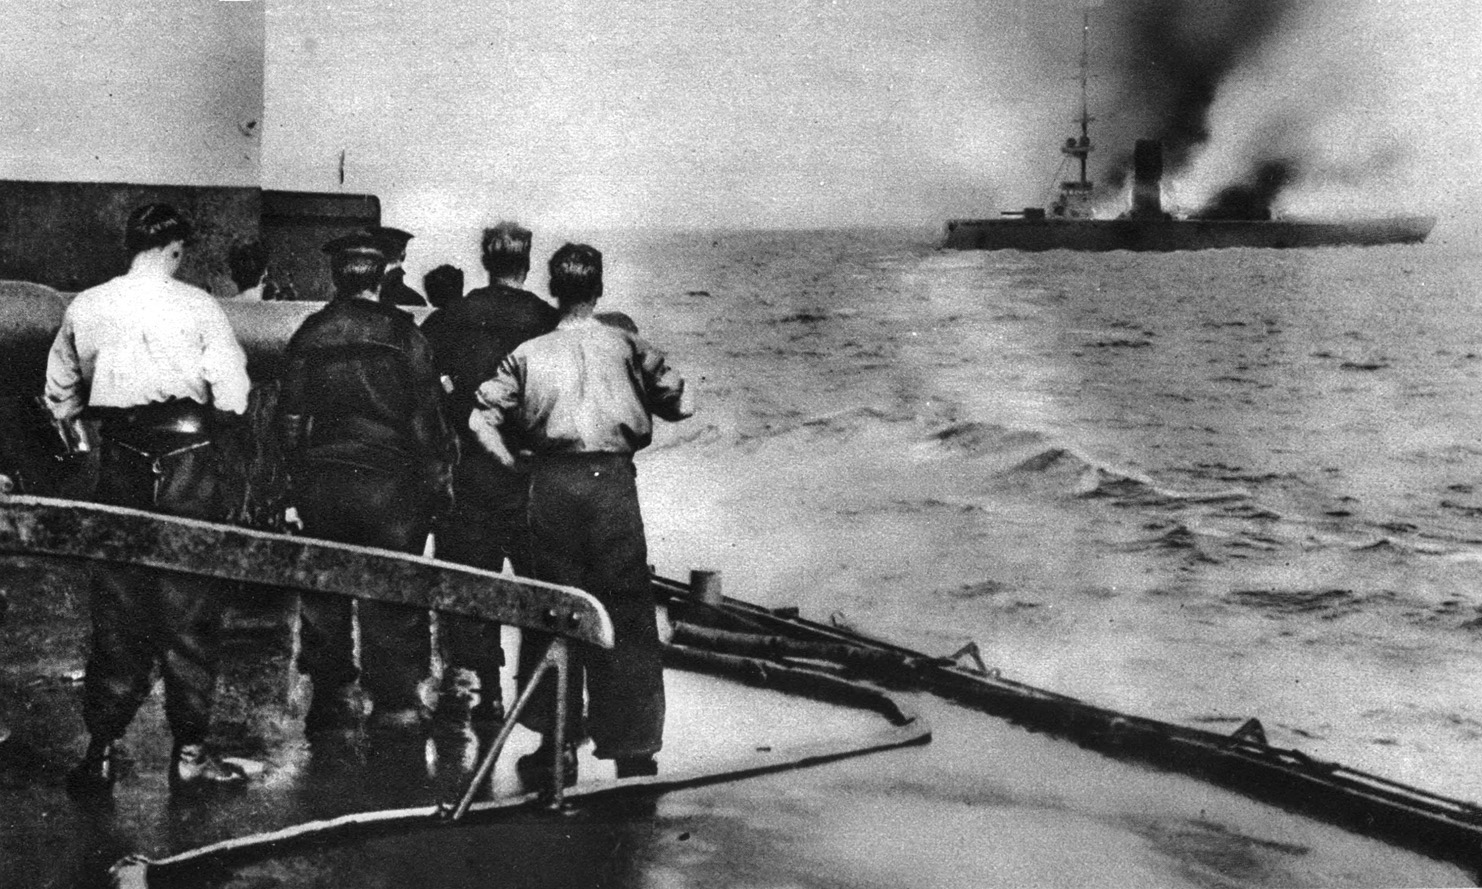 British sailors watch as the German cruiser Mainz suffers crippling fire. The German light cruisers were no match for superior British tactics and firepower at Heligoland Bight.